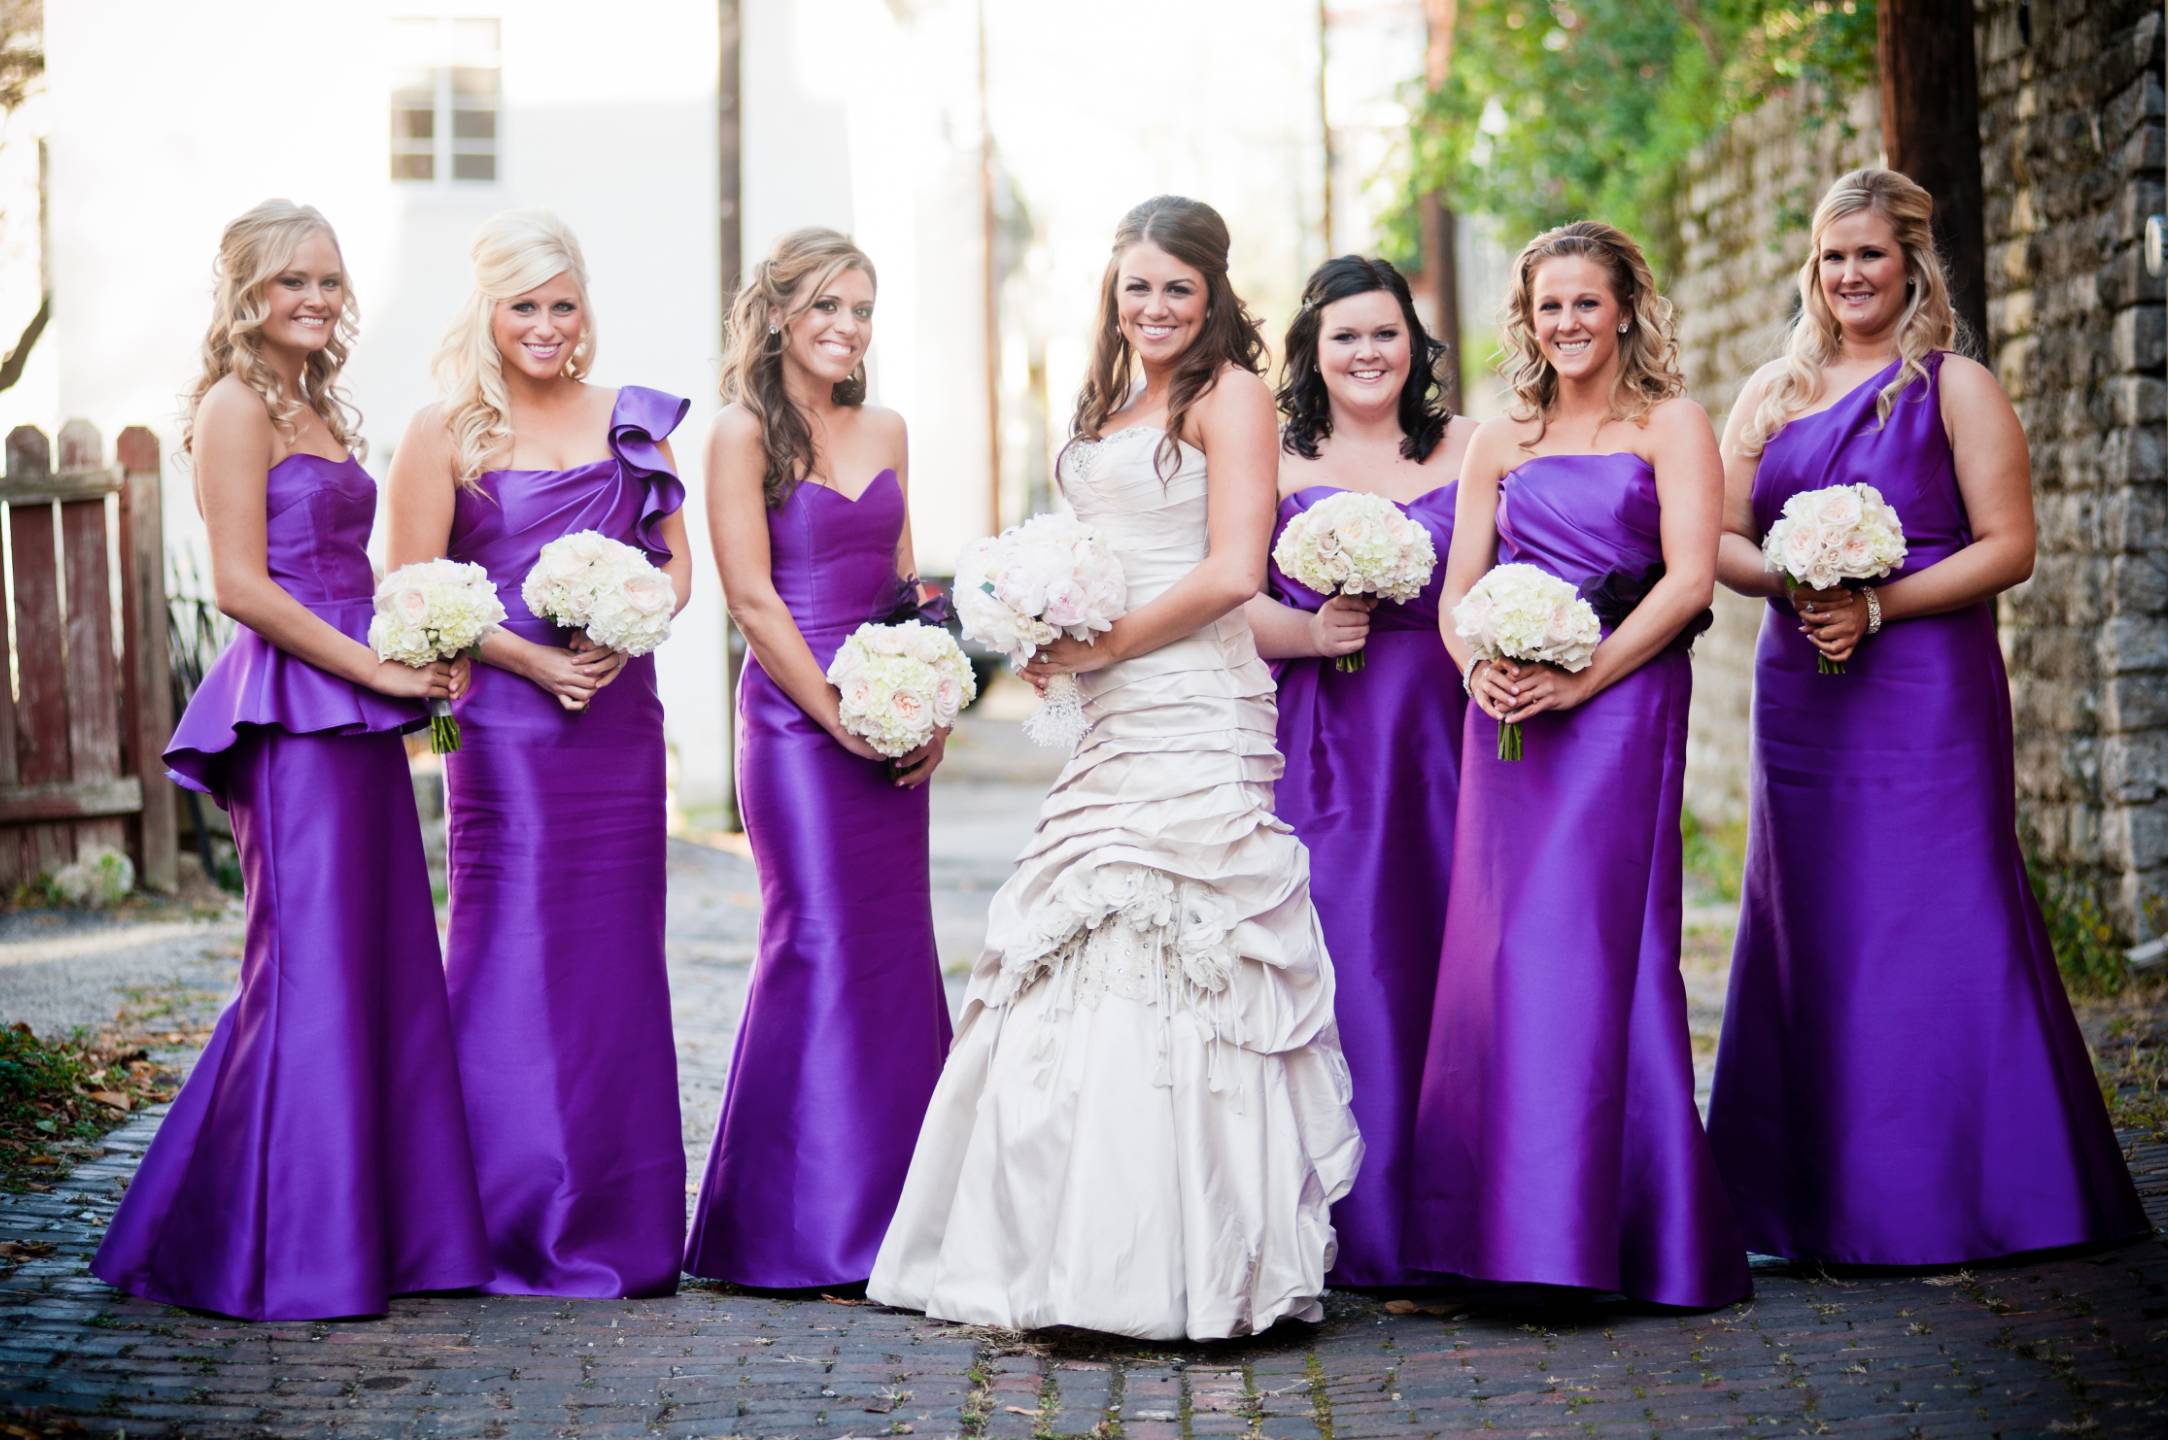 Bride And Bridesmaid Dresses High Cut Wedding Dresses - Wedding ...